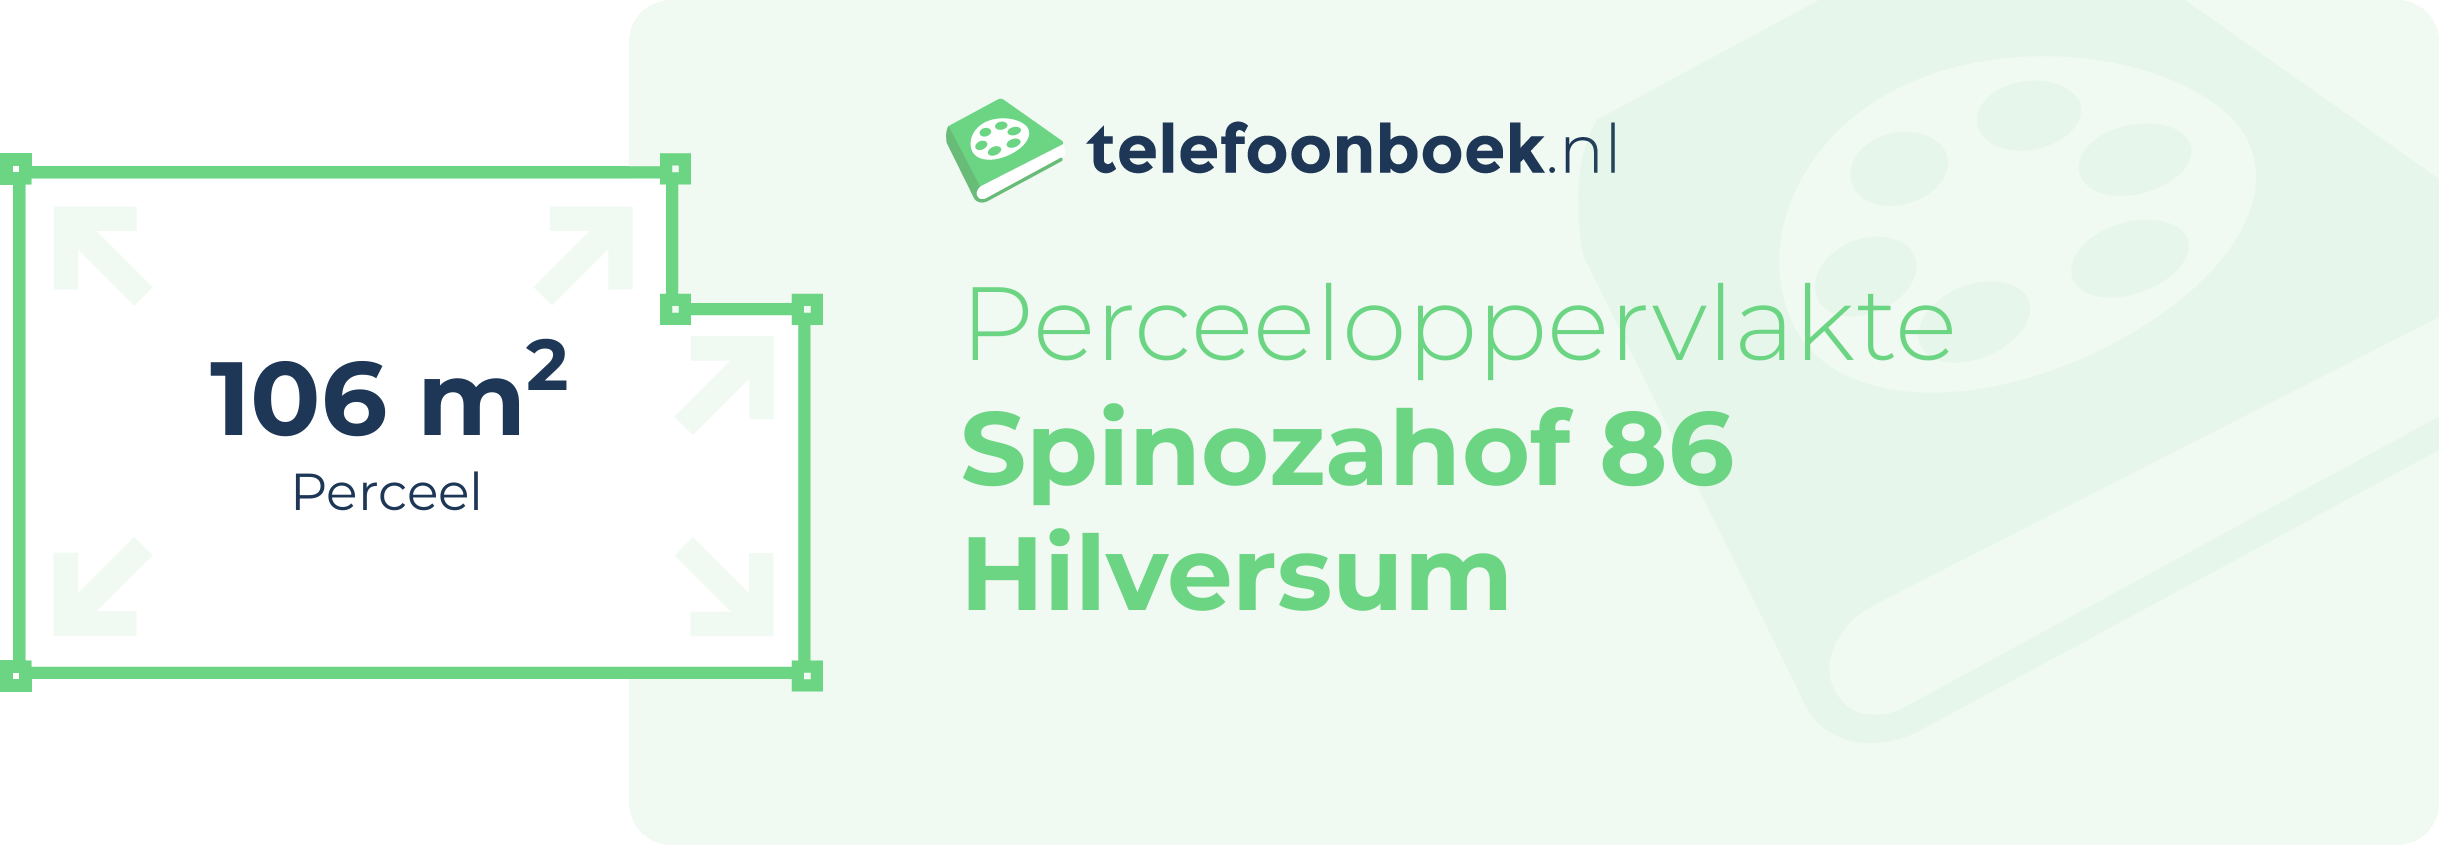 Perceeloppervlakte Spinozahof 86 Hilversum